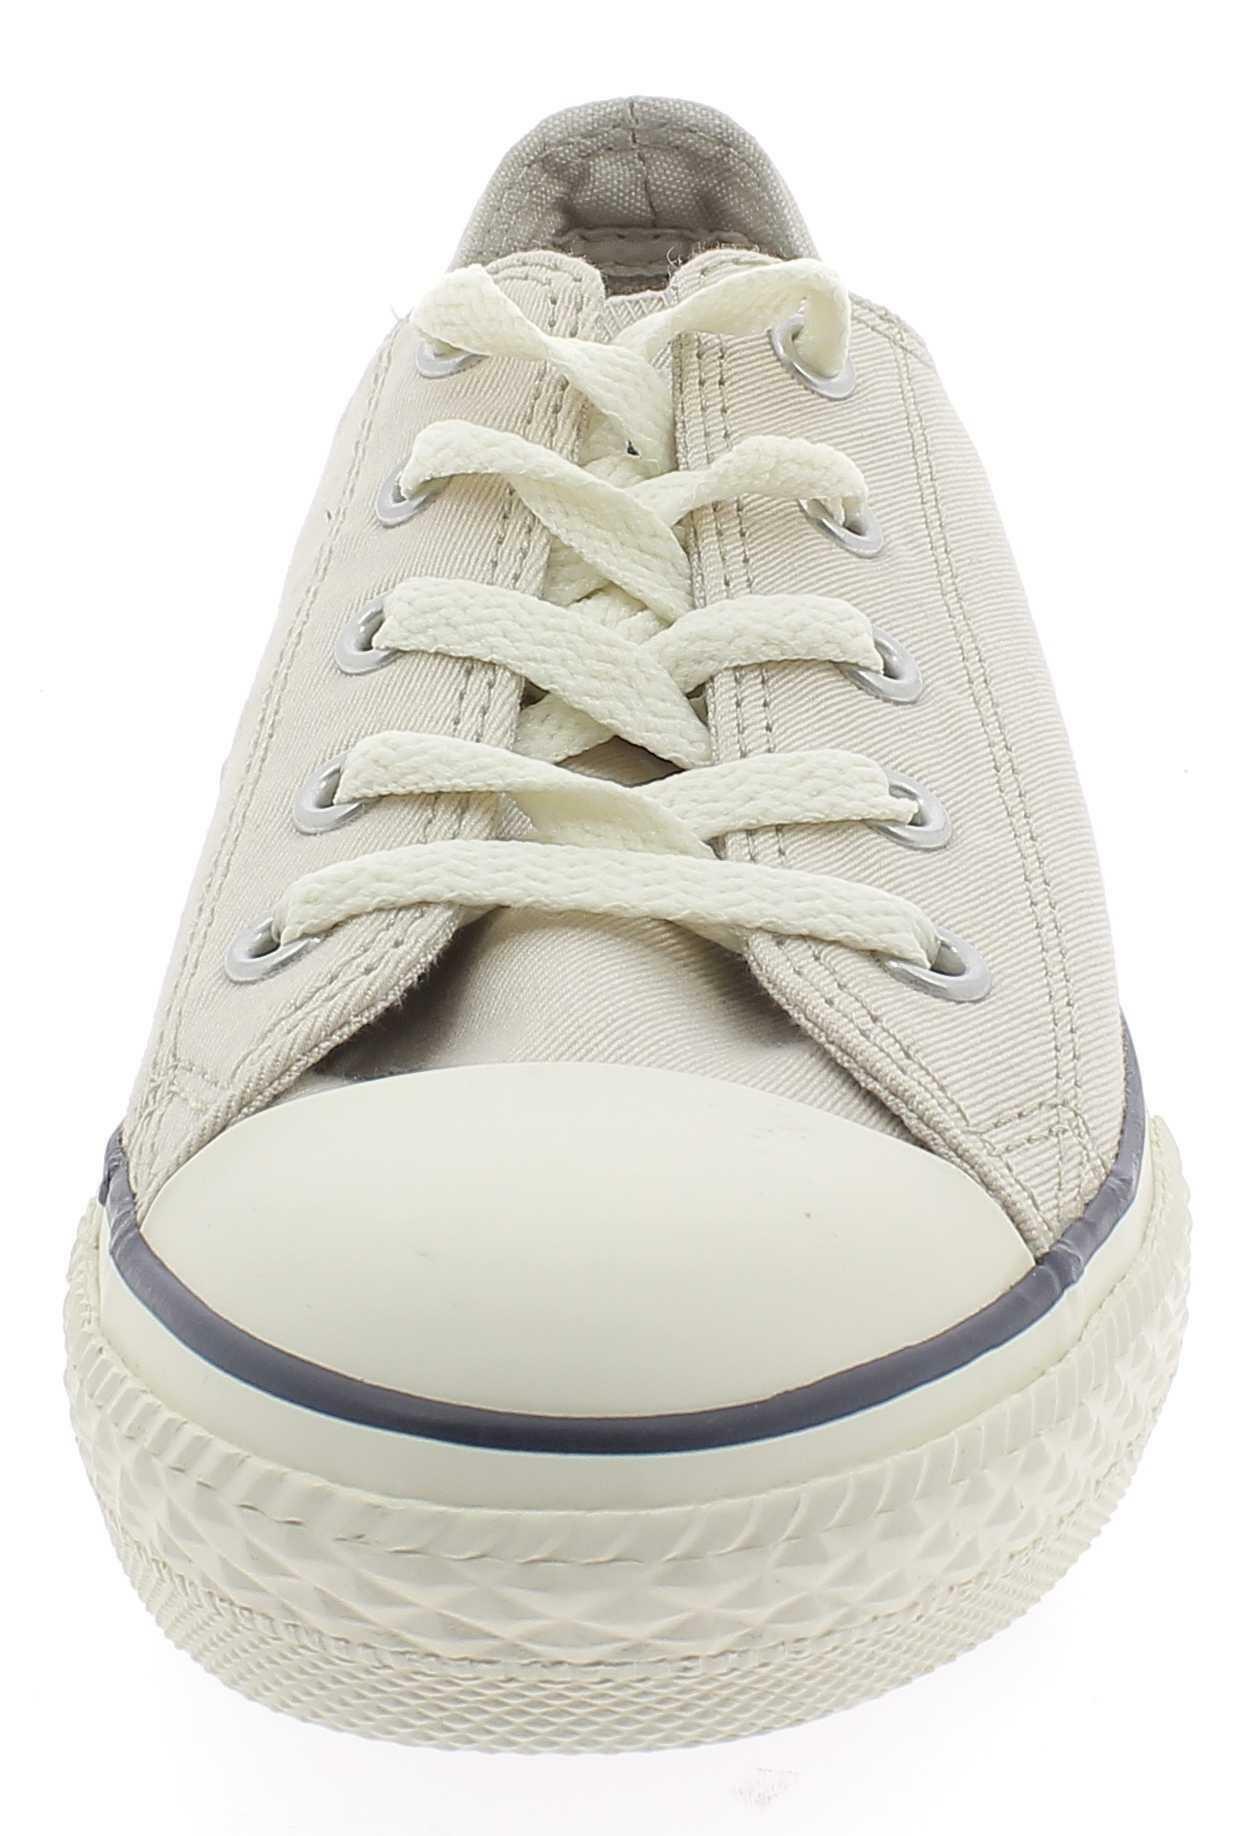 converse converse all star scarpe sneakers junior bassa low beige 630424c